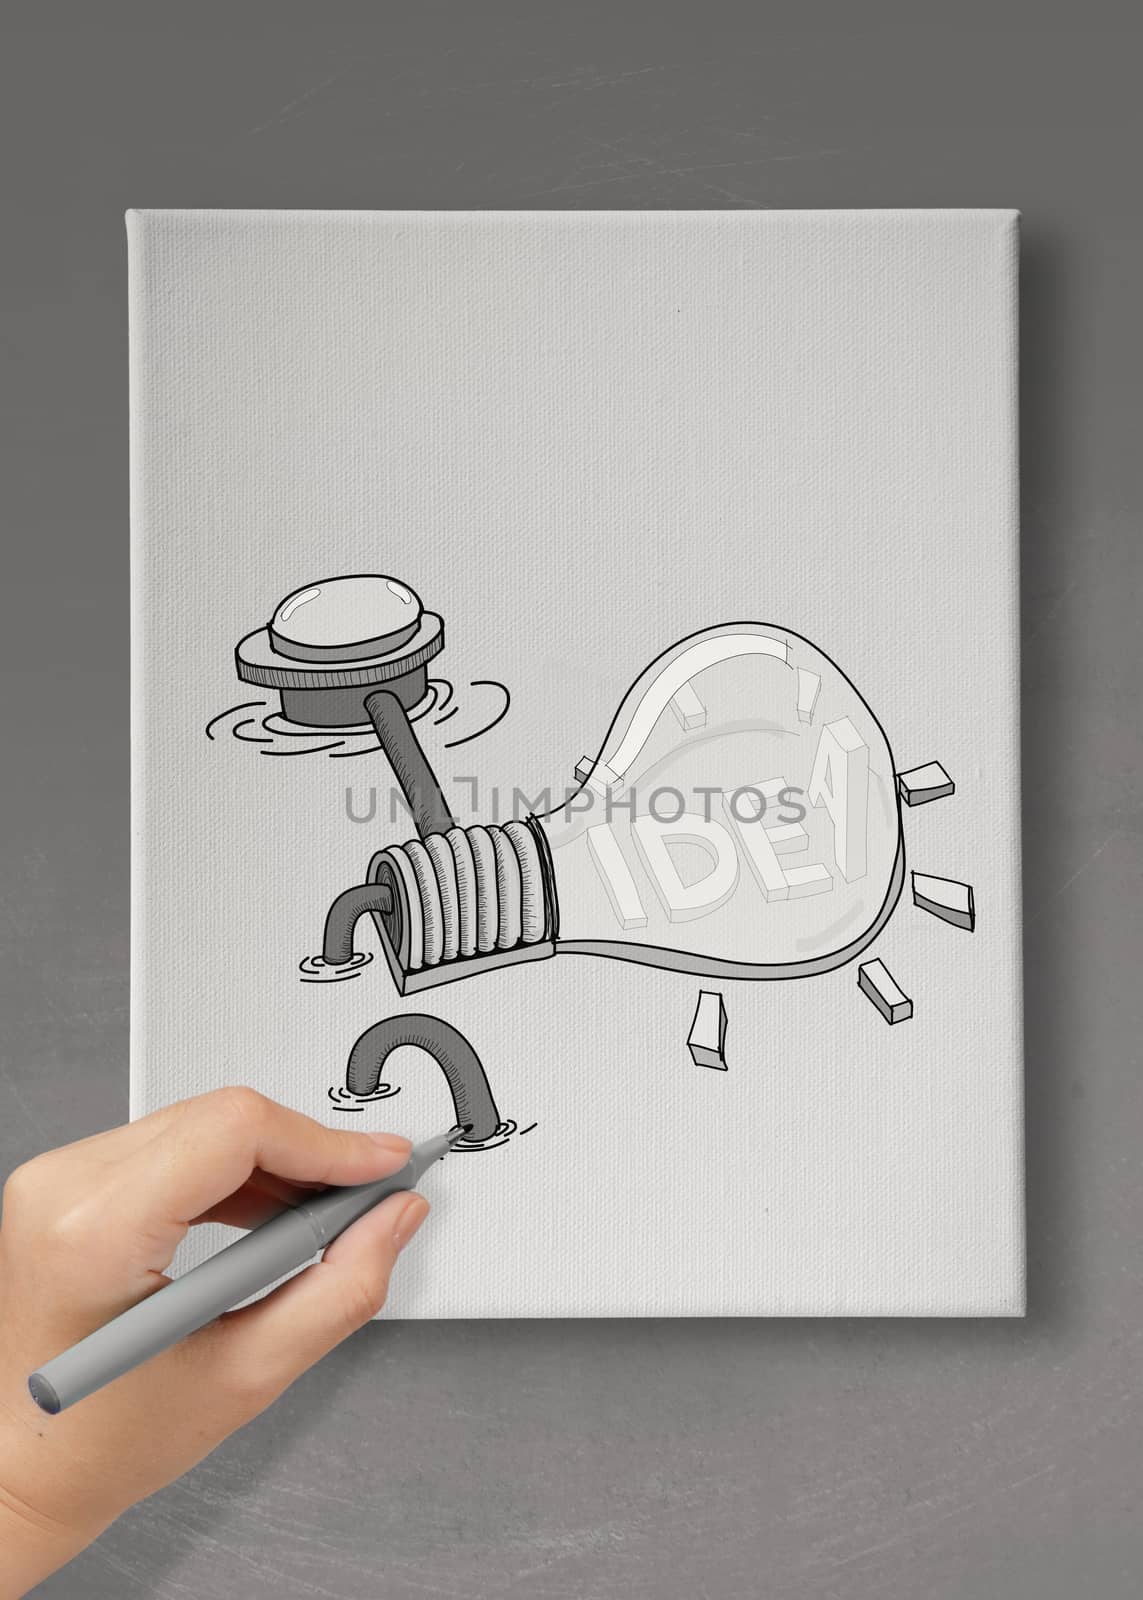 hand drawn light bulb with IDEA word on dark canvas board as creative concept